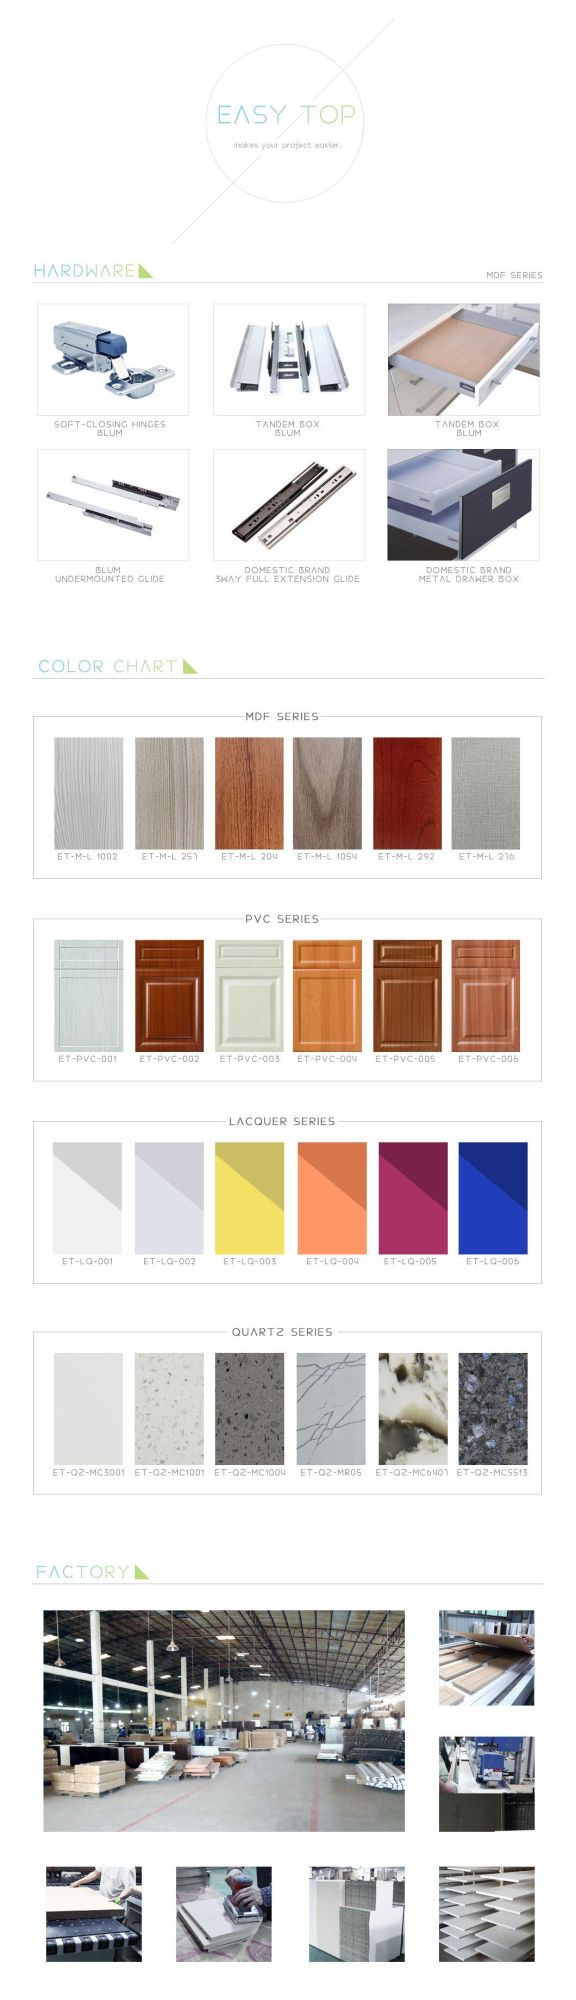 Bespoke Custom Door Matt Gloss Lacquer Rta Kitchen Cabinets with Good Price Home Furniture